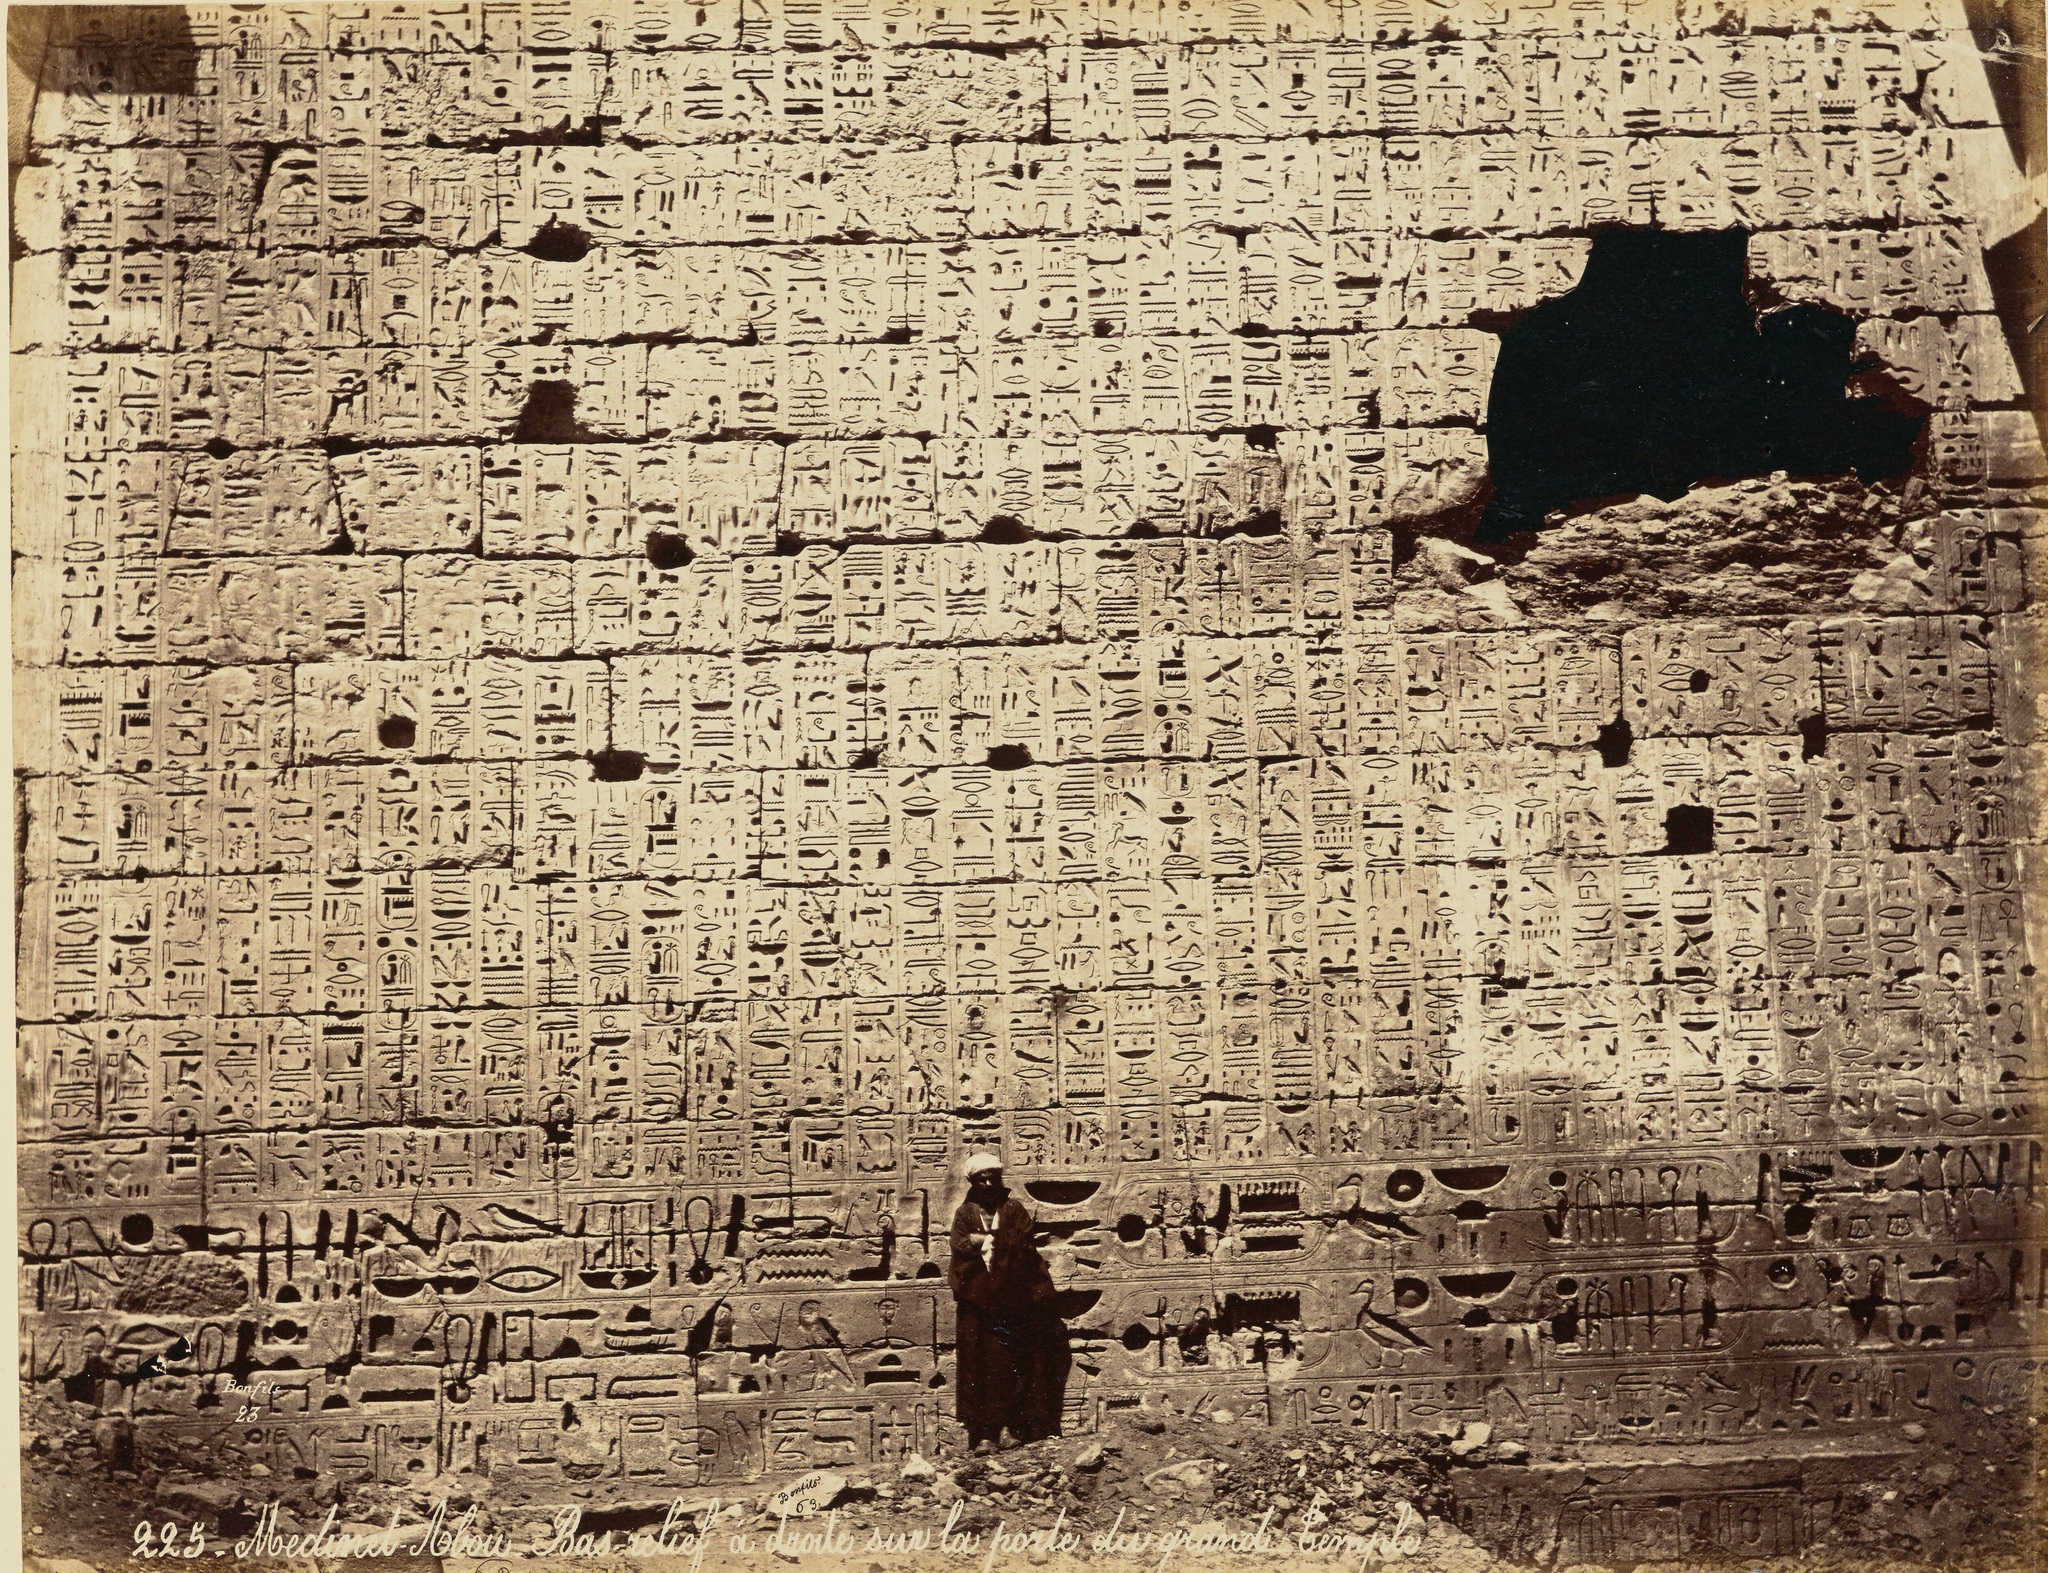 Egypt 1870s - Sciencepro, Egypt, Ancient Egypt, Informative, Temple, Historical photo, Black and white photo, Interesting, Old photo, Longpost